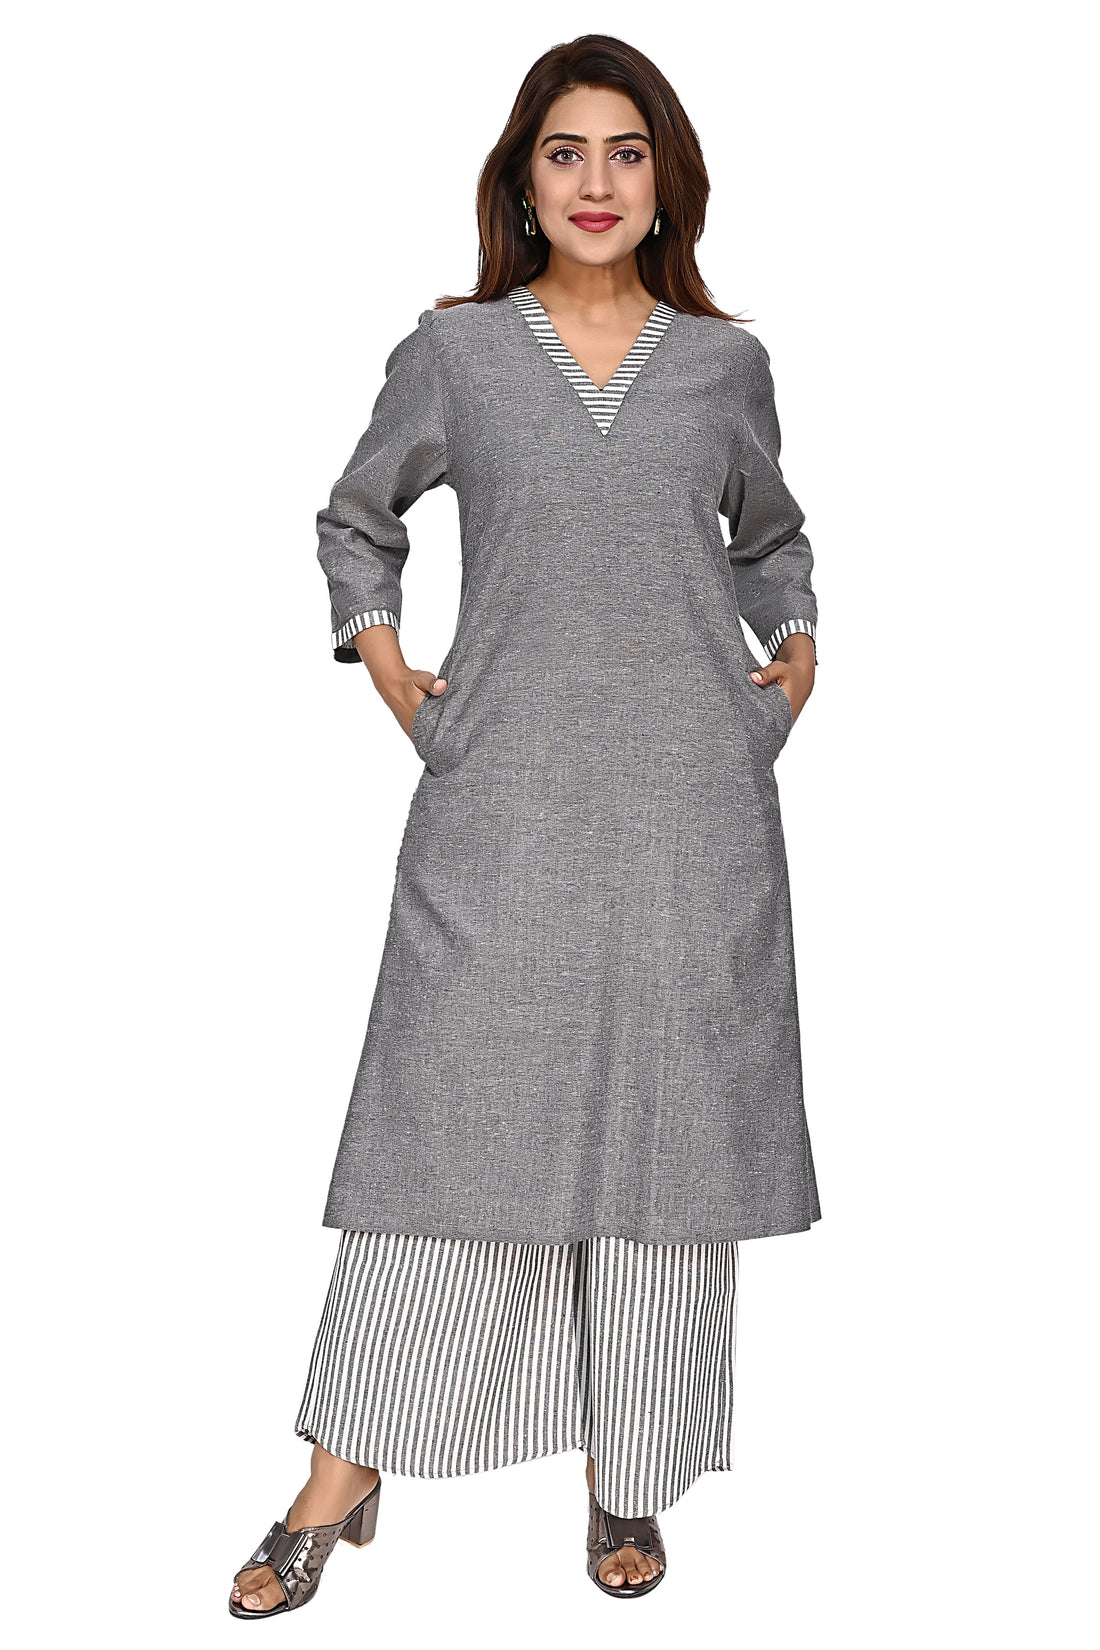 Nirmal online Premium cotton coord set kurti for Women in Black colour